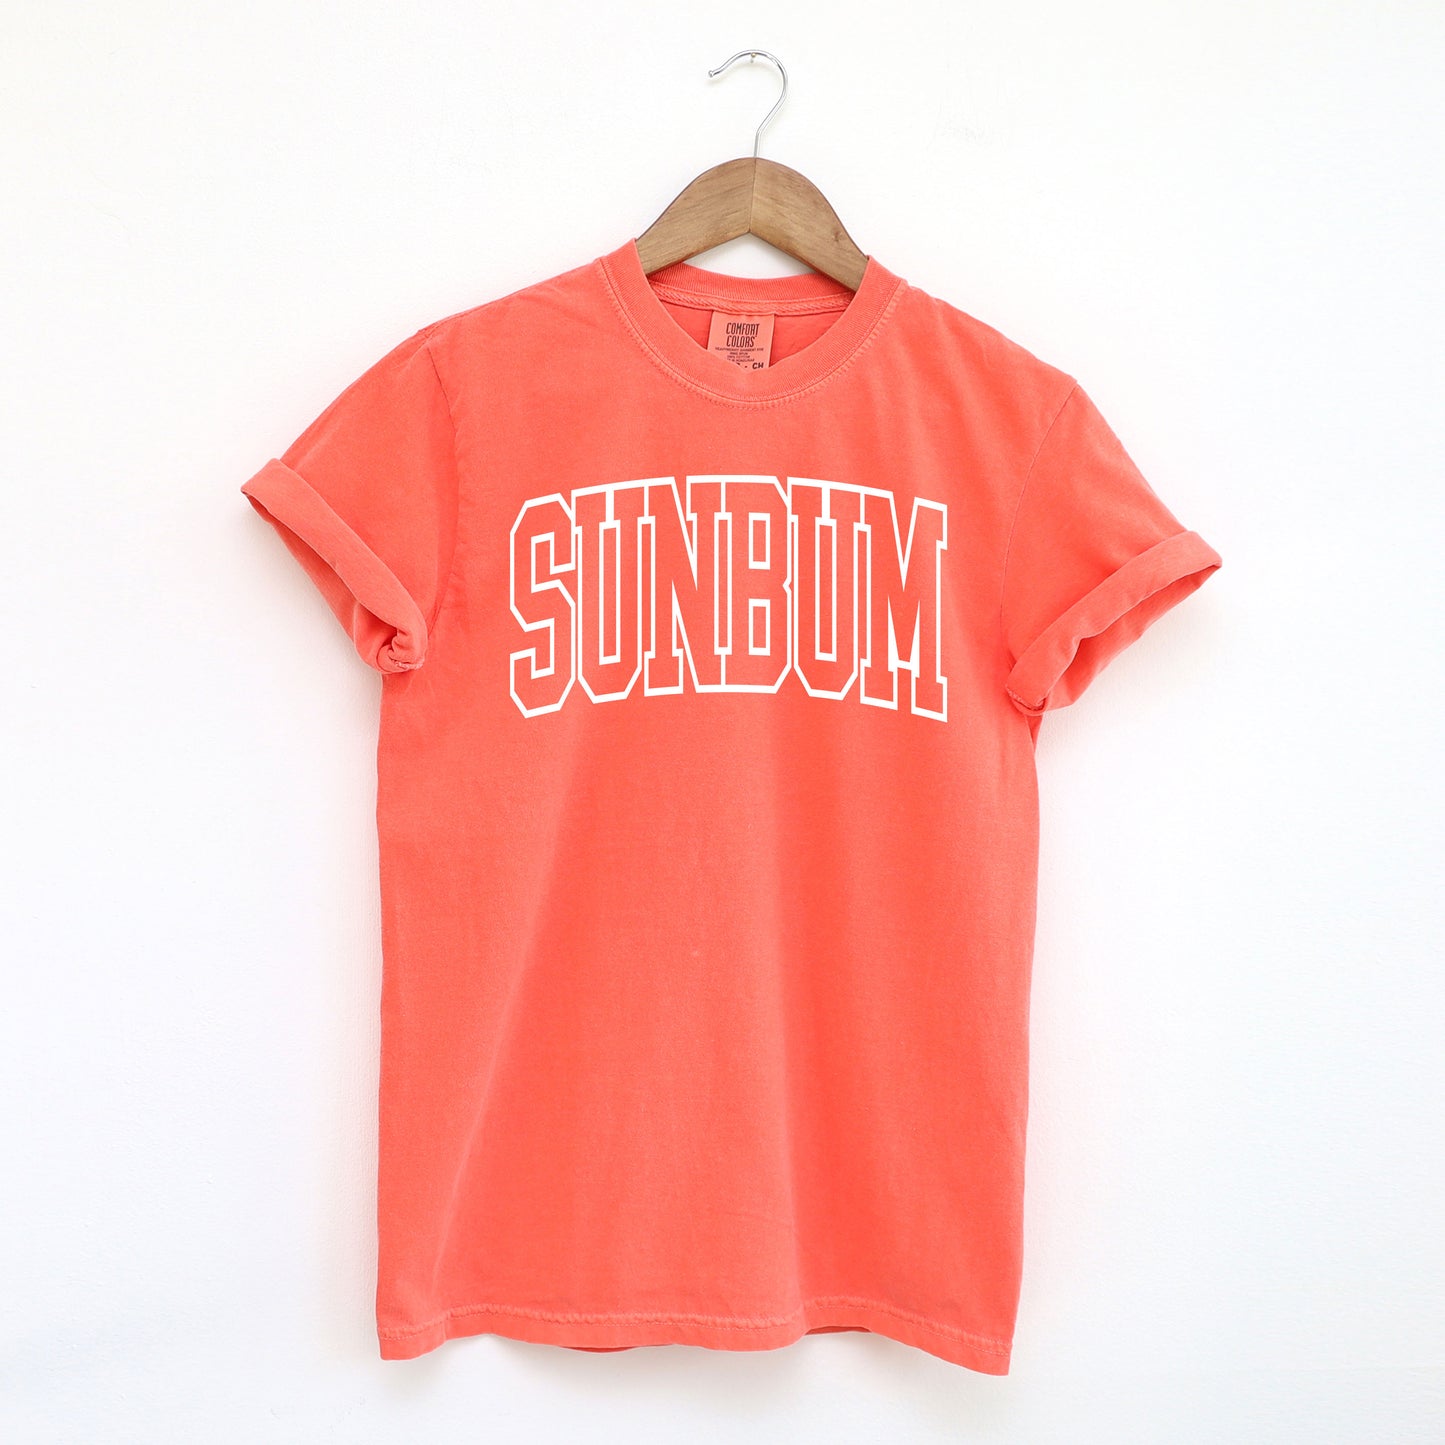 Varsity Sunbum | Garment Dyed Short Sleeve Tee